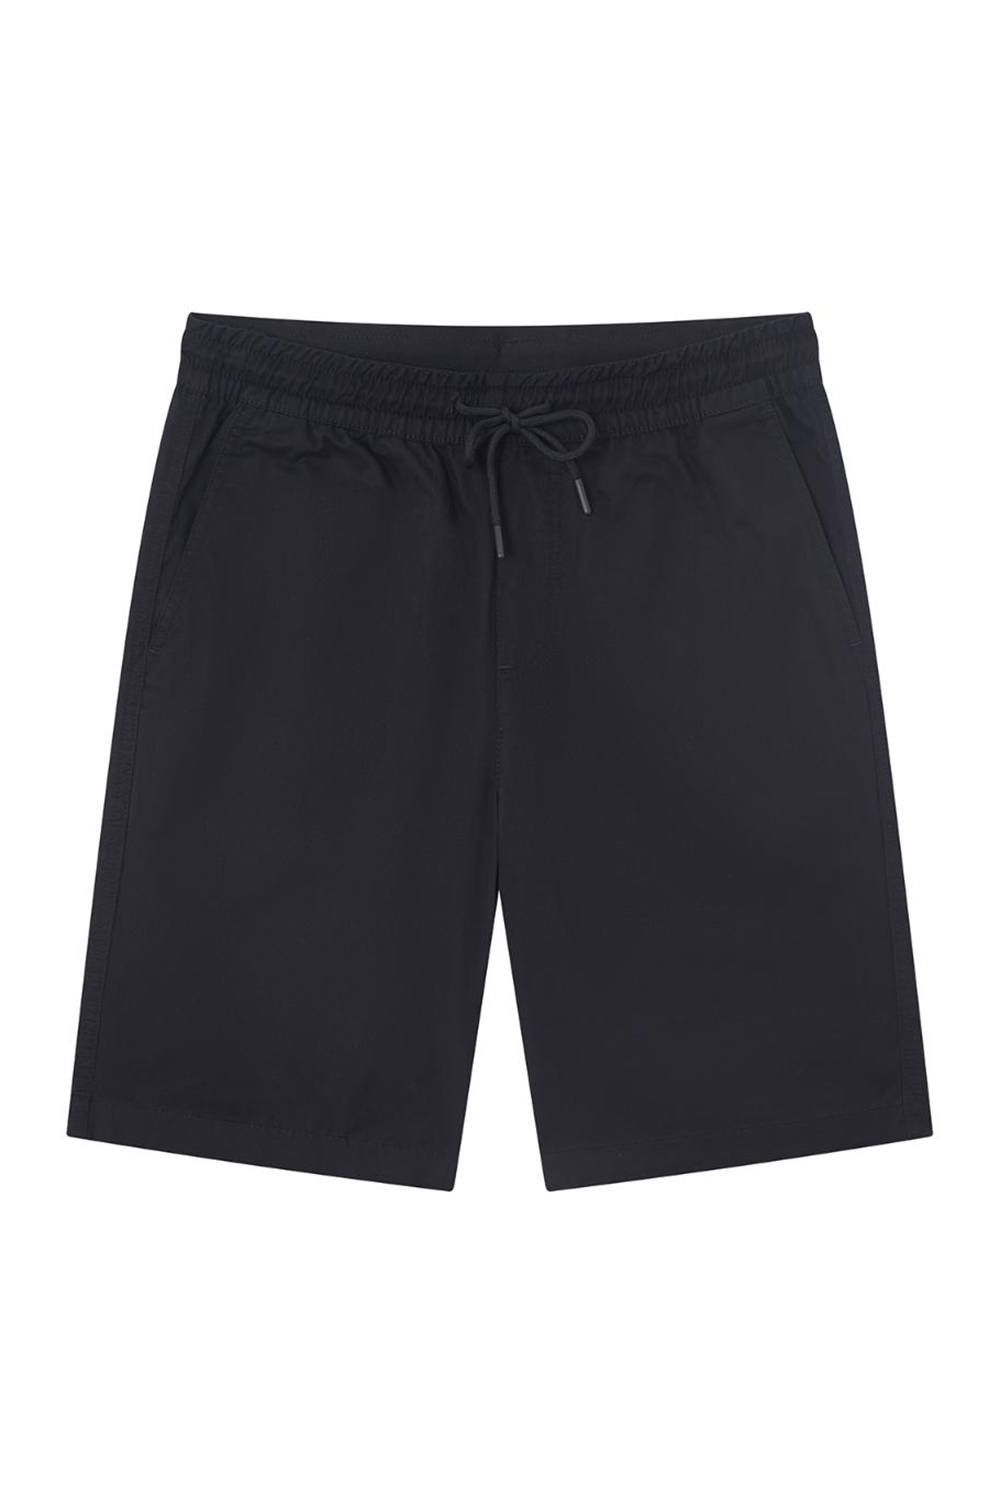 Giordano 0110320509 Mens Mid Rise Bermuda Shorts | Odel.lk